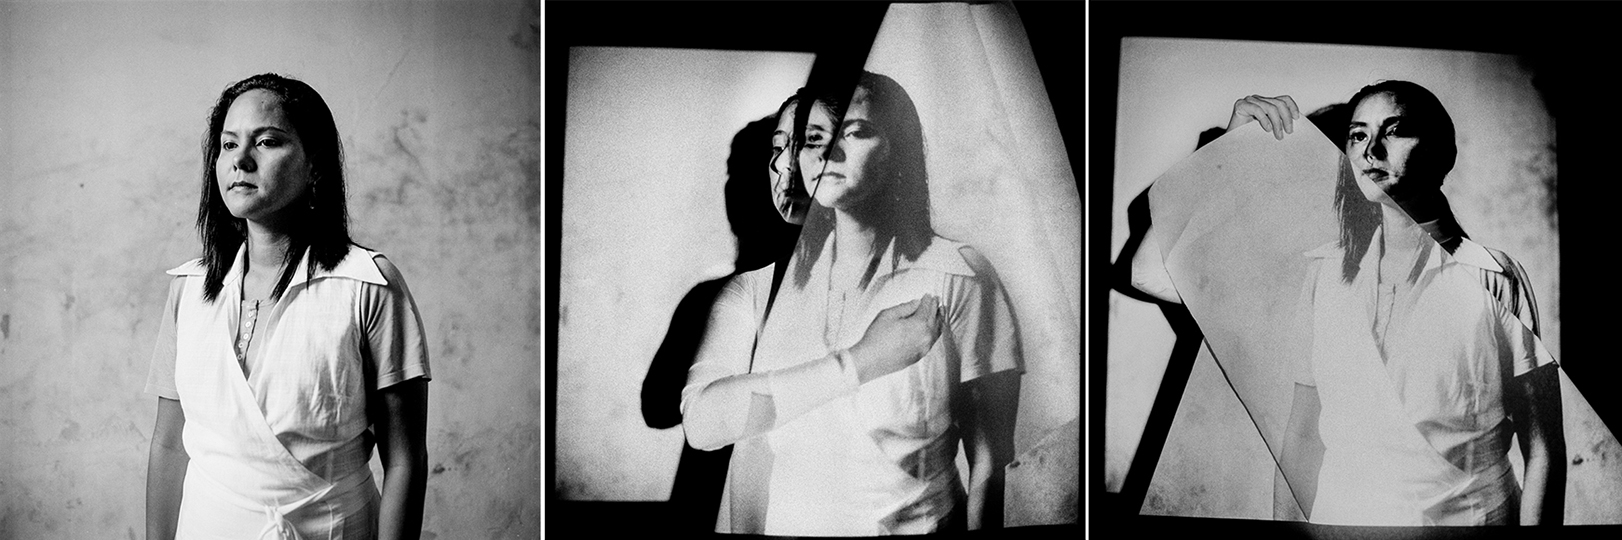  Time Twin (Triptych), Self-Portrait as Angie, Lima, Peru 1979 / Lima, Peru 2014 / Claremont, CA, 2018 